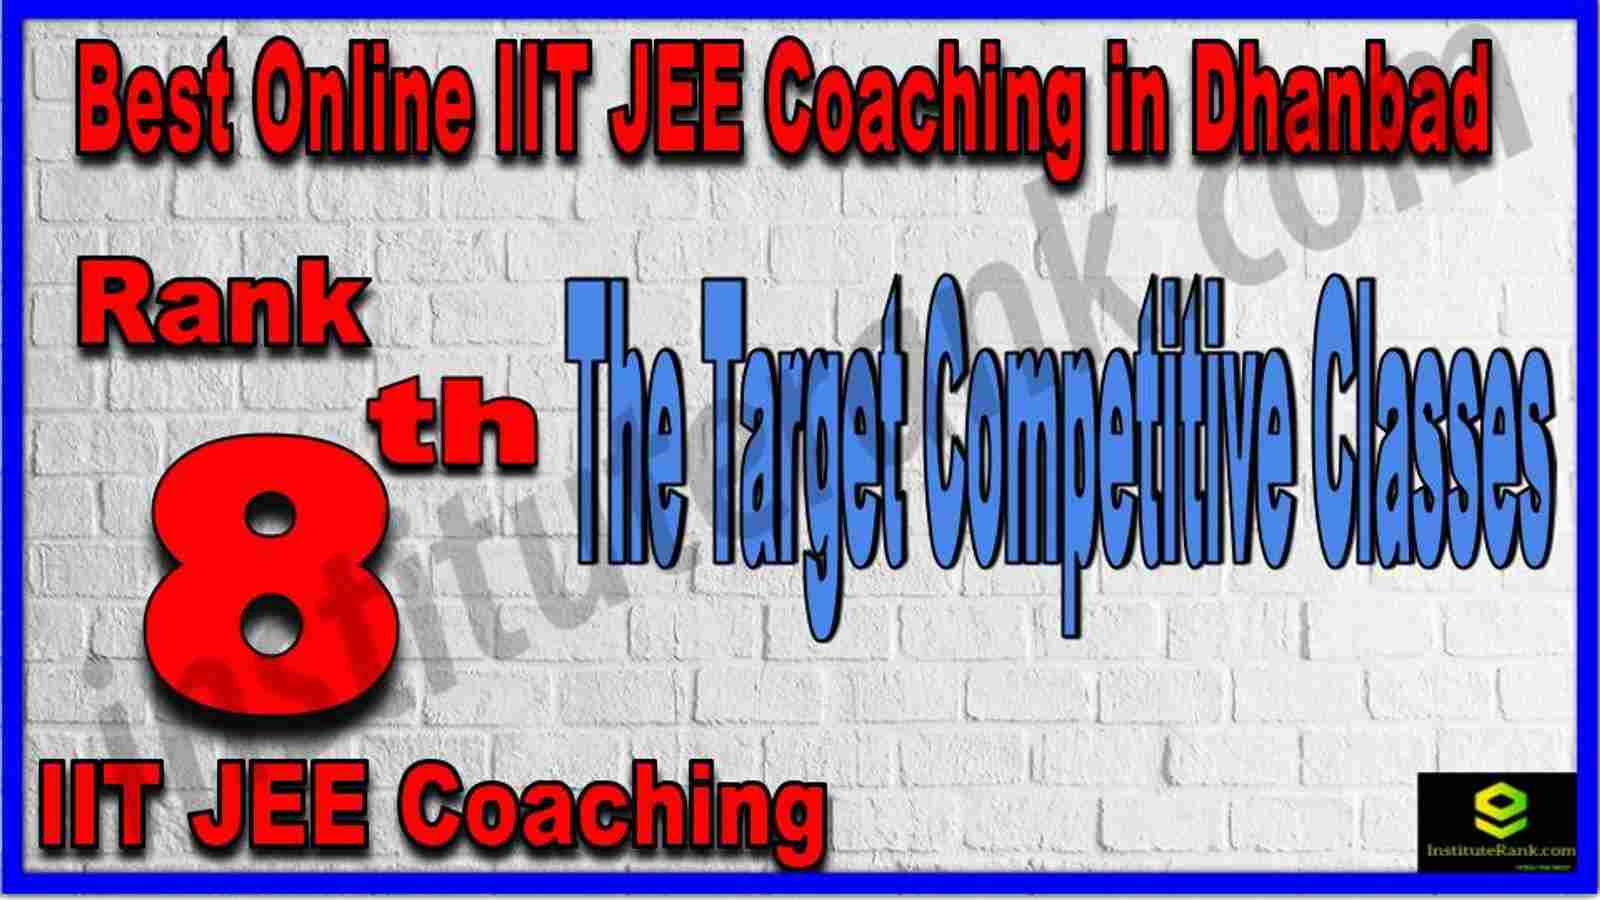 Rank 8th Best Online IIT JEE Coaching in Dhanbad